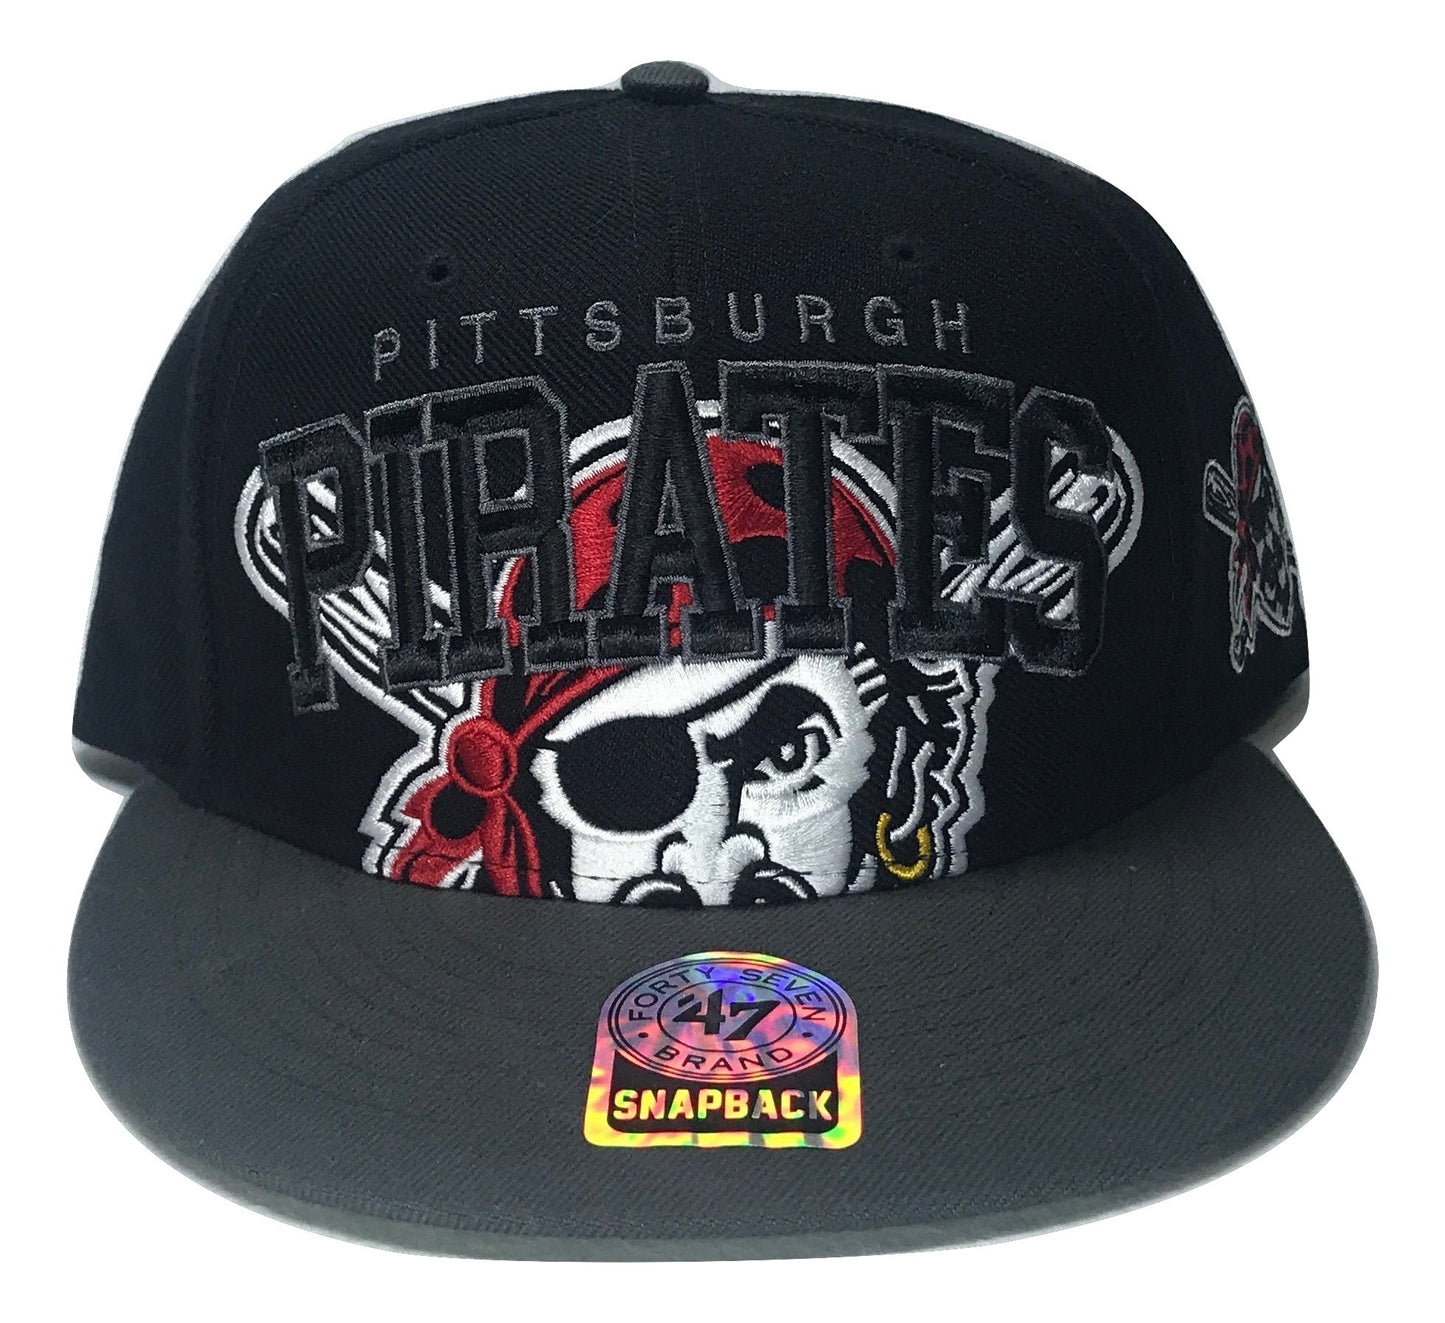 Pittsburgh Pirates (Black) Snapback